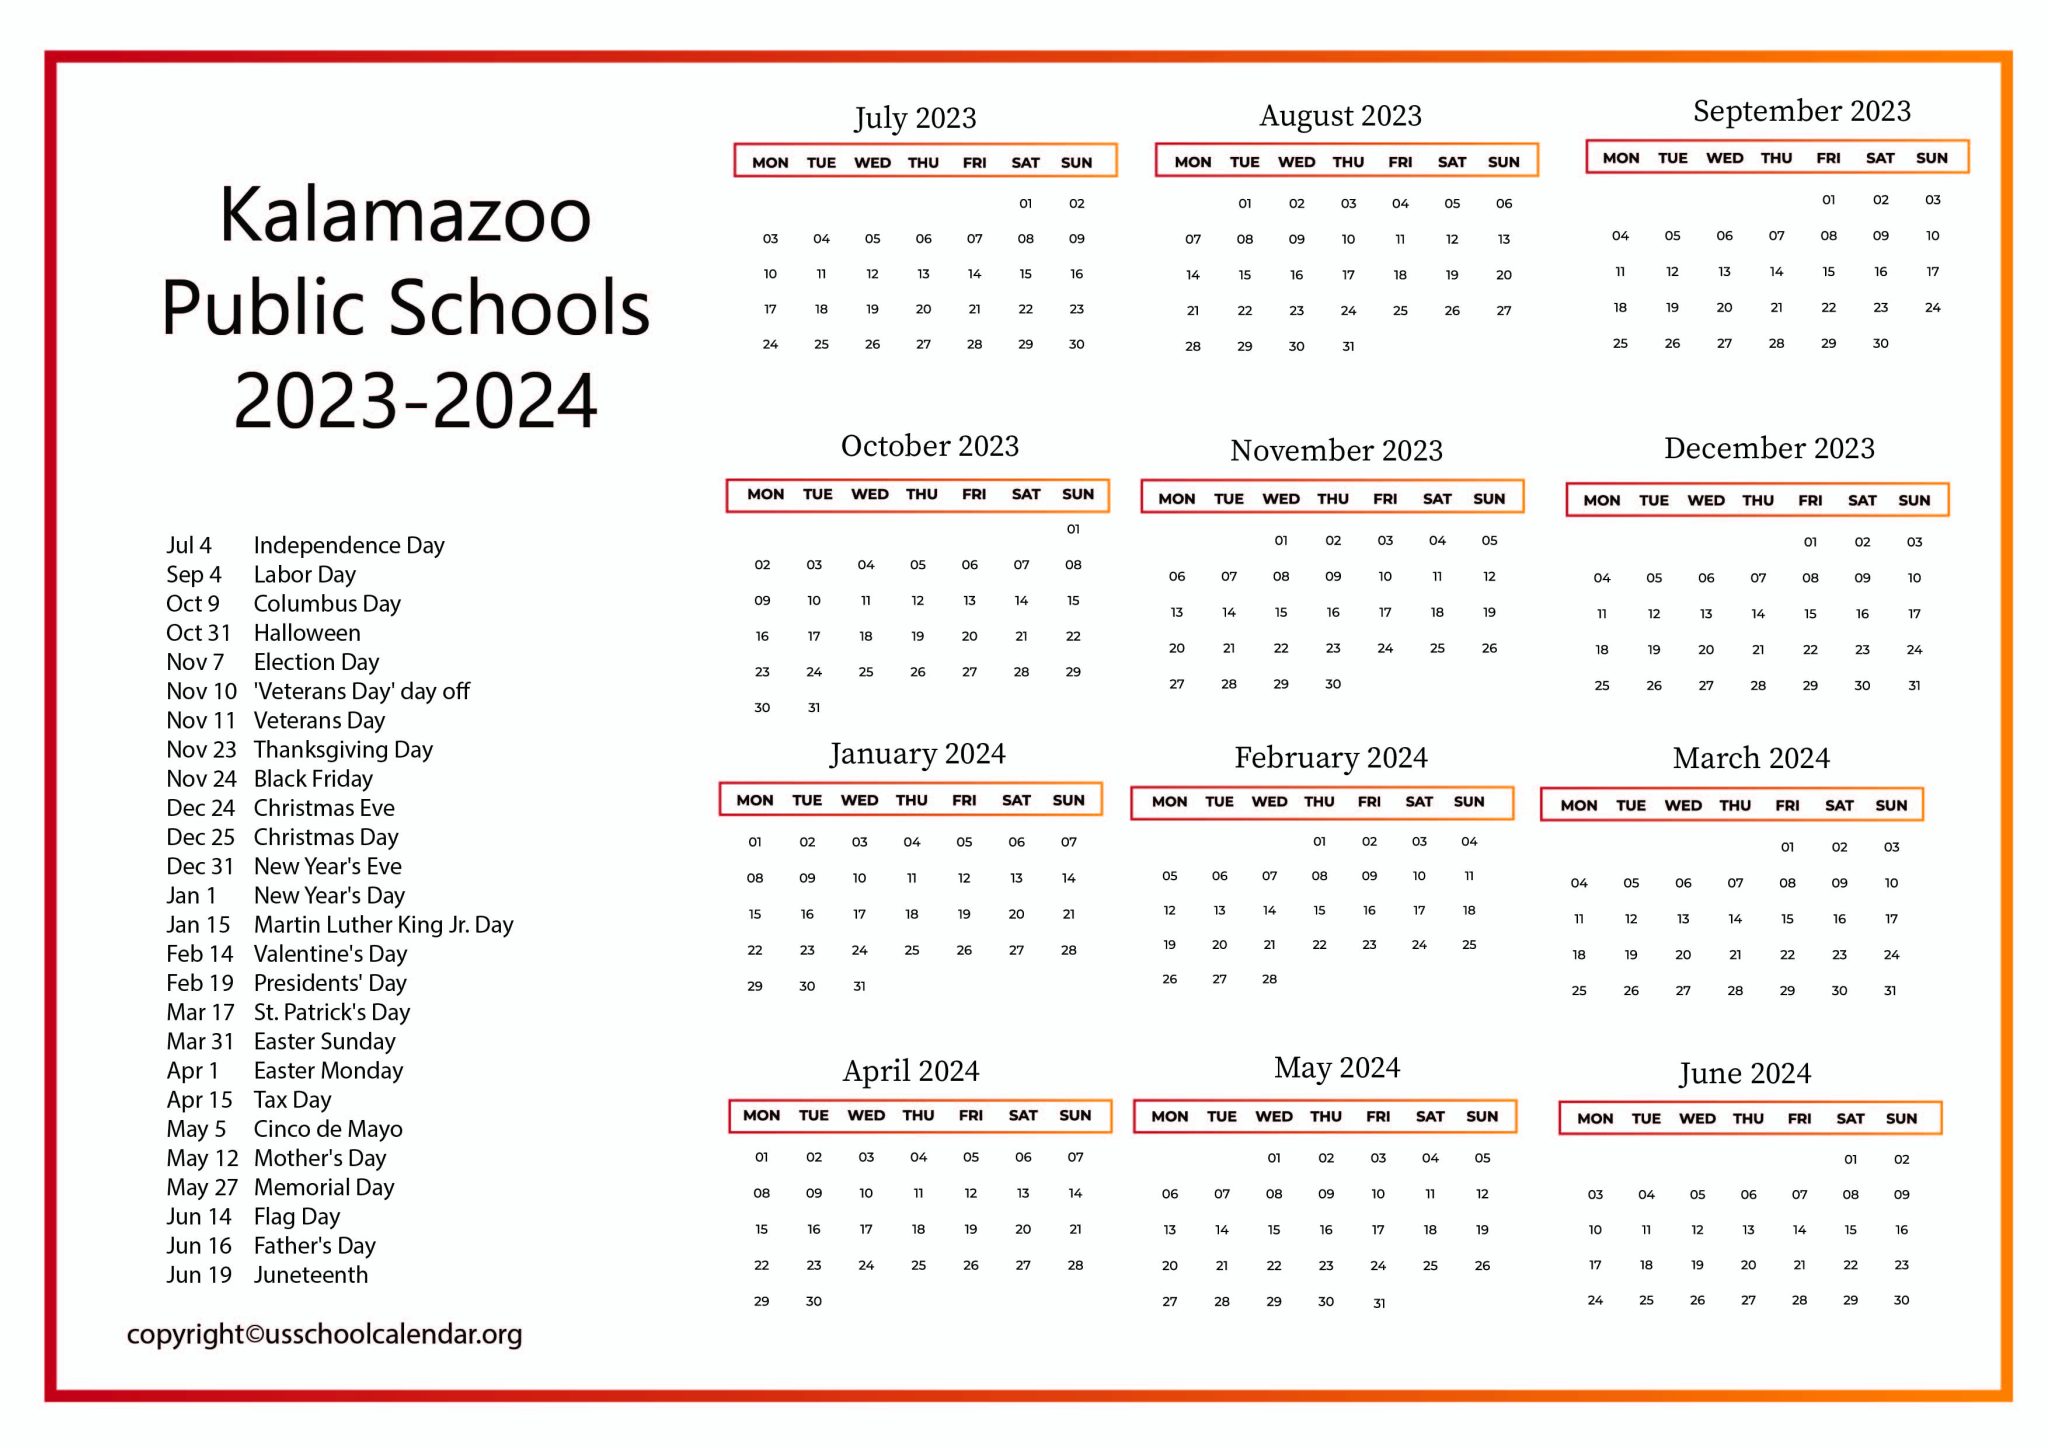 Kalamazoo Public Schools Calendar With Holidays 2023 2024